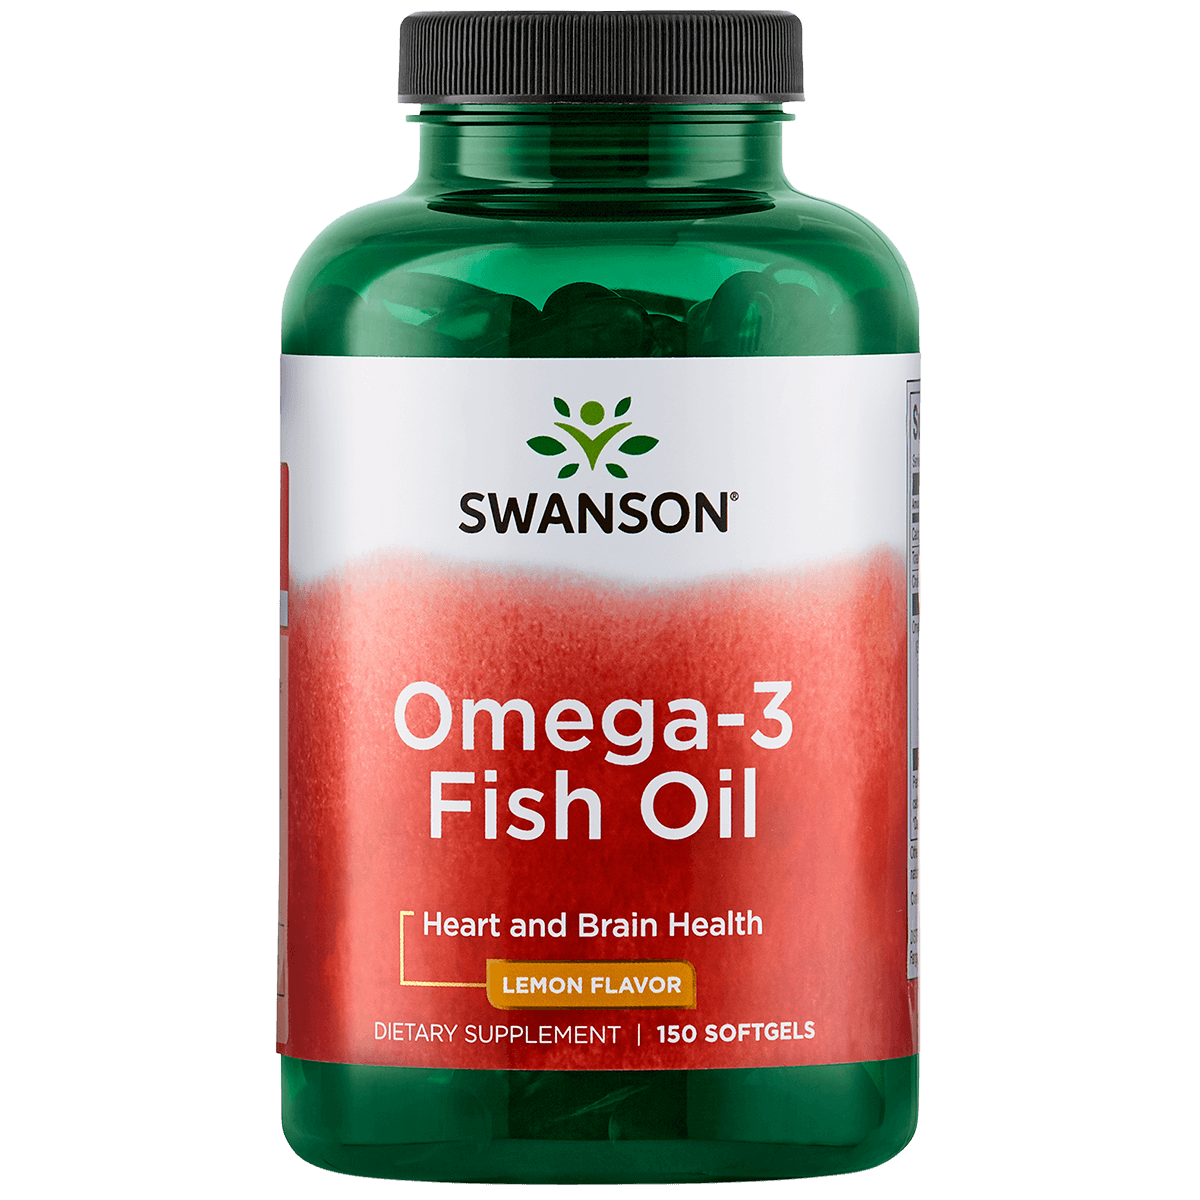 Omega-3 - Fish Oil